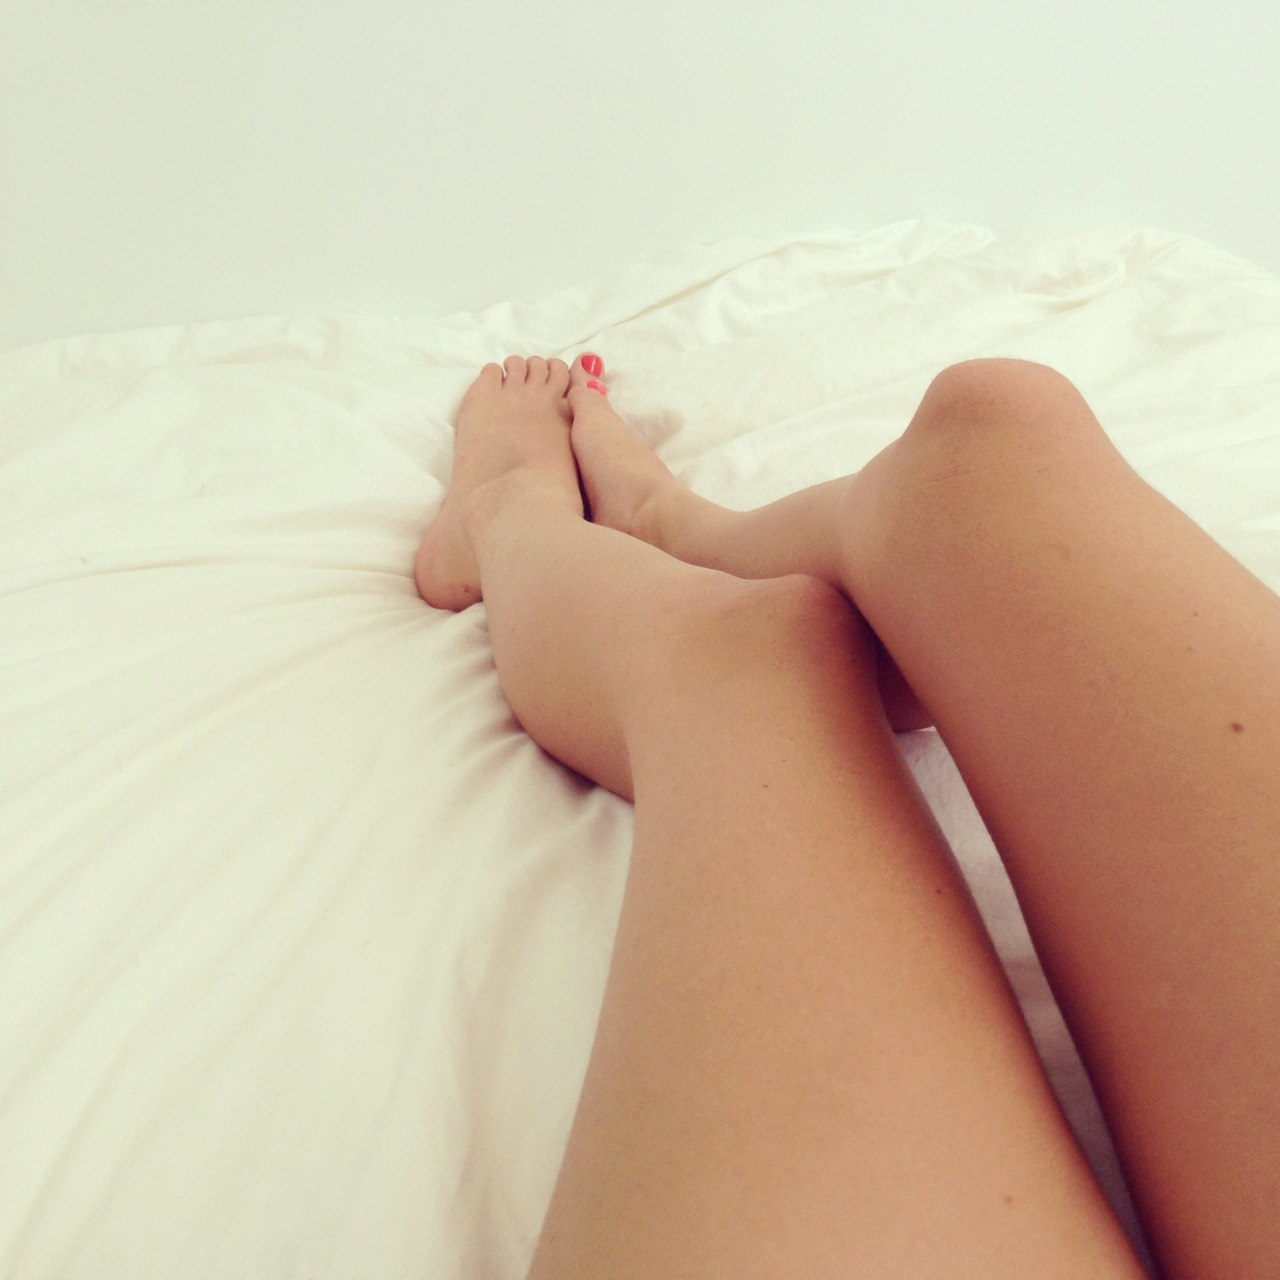 Ноги девушки в кровати